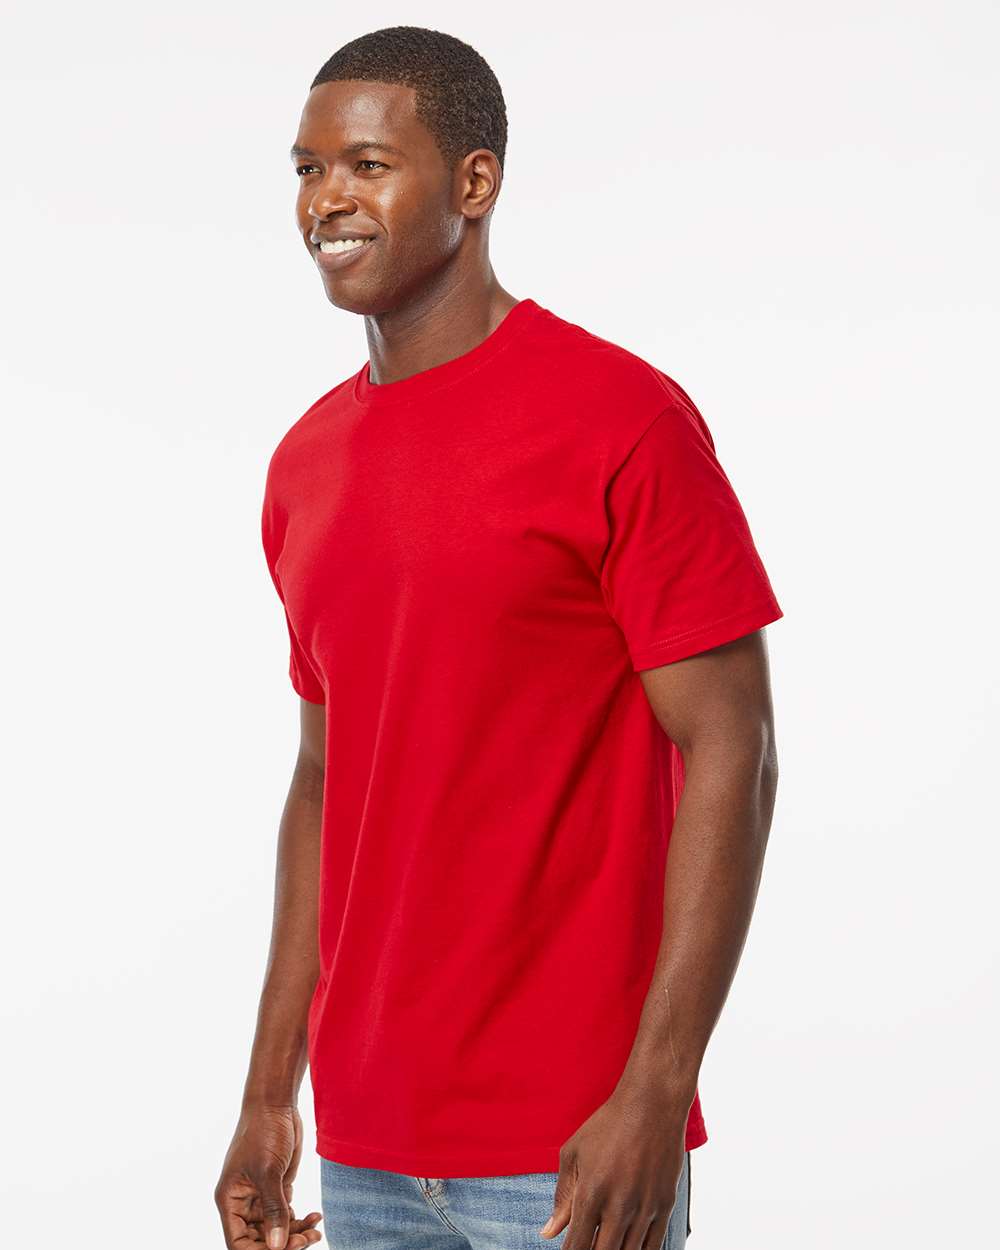 M&O Ring-Spun T-Shirt 5500 #colormdl_Deep Red